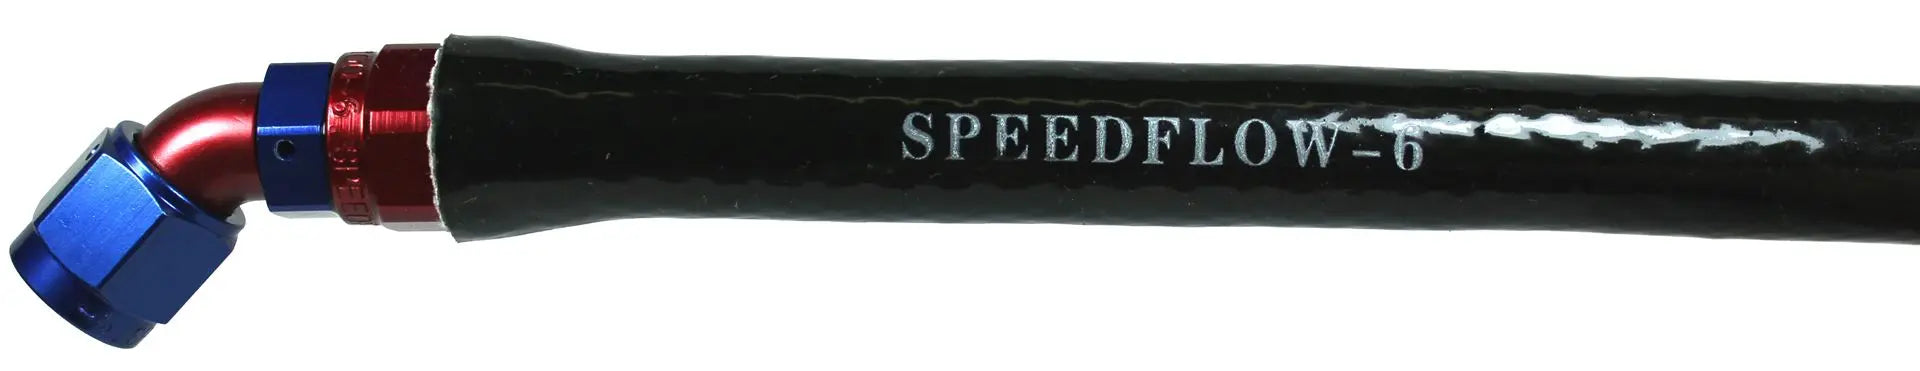 Speedflow 599 Series Firesleve Speedflow